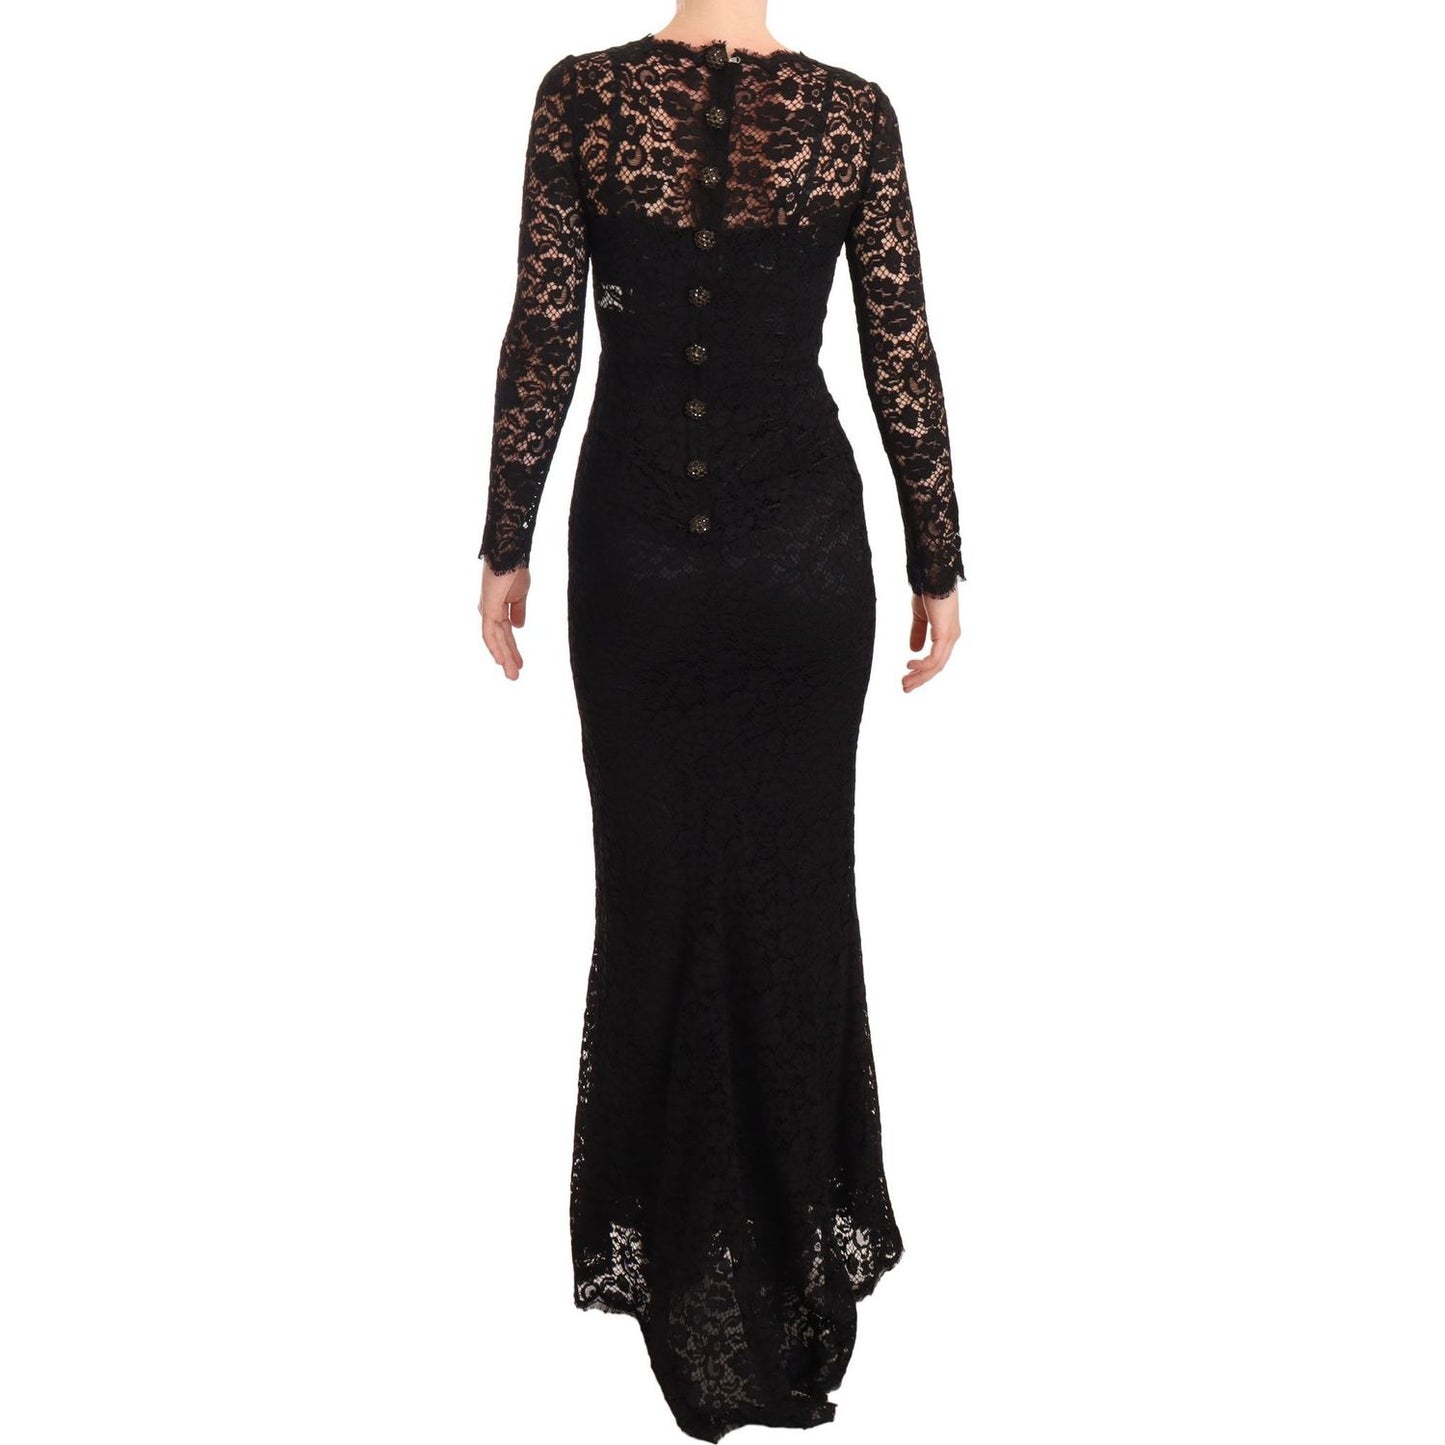 Dolce & Gabbana Elegant Laminated Lace Mermaid Dress WOMAN DRESSES dress-cotton-black-lace-mermaid-long-sleeves